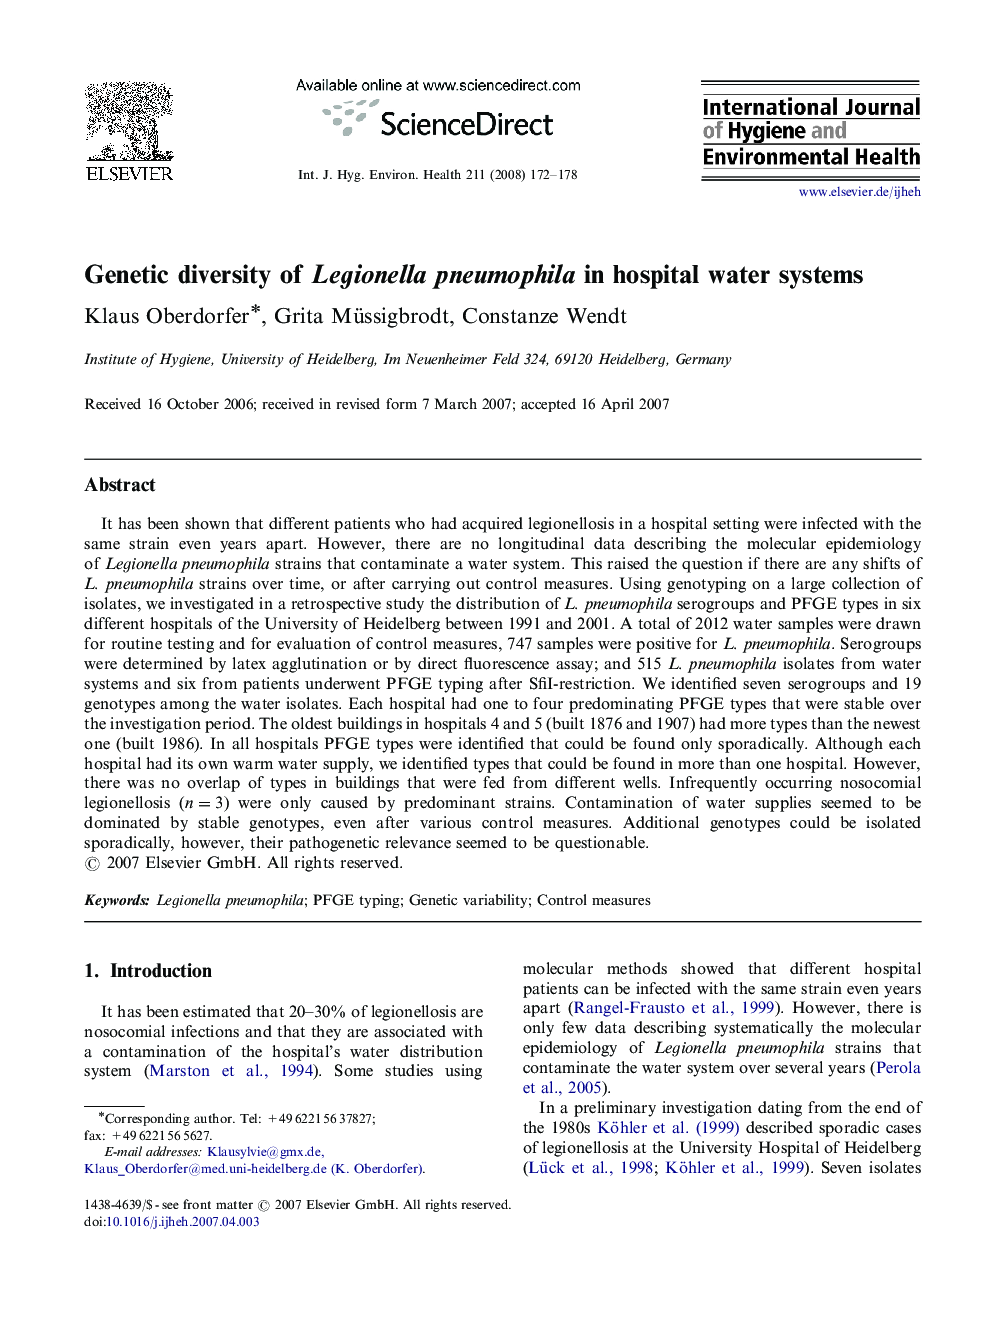 Genetic diversity of Legionella pneumophila in hospital water systems